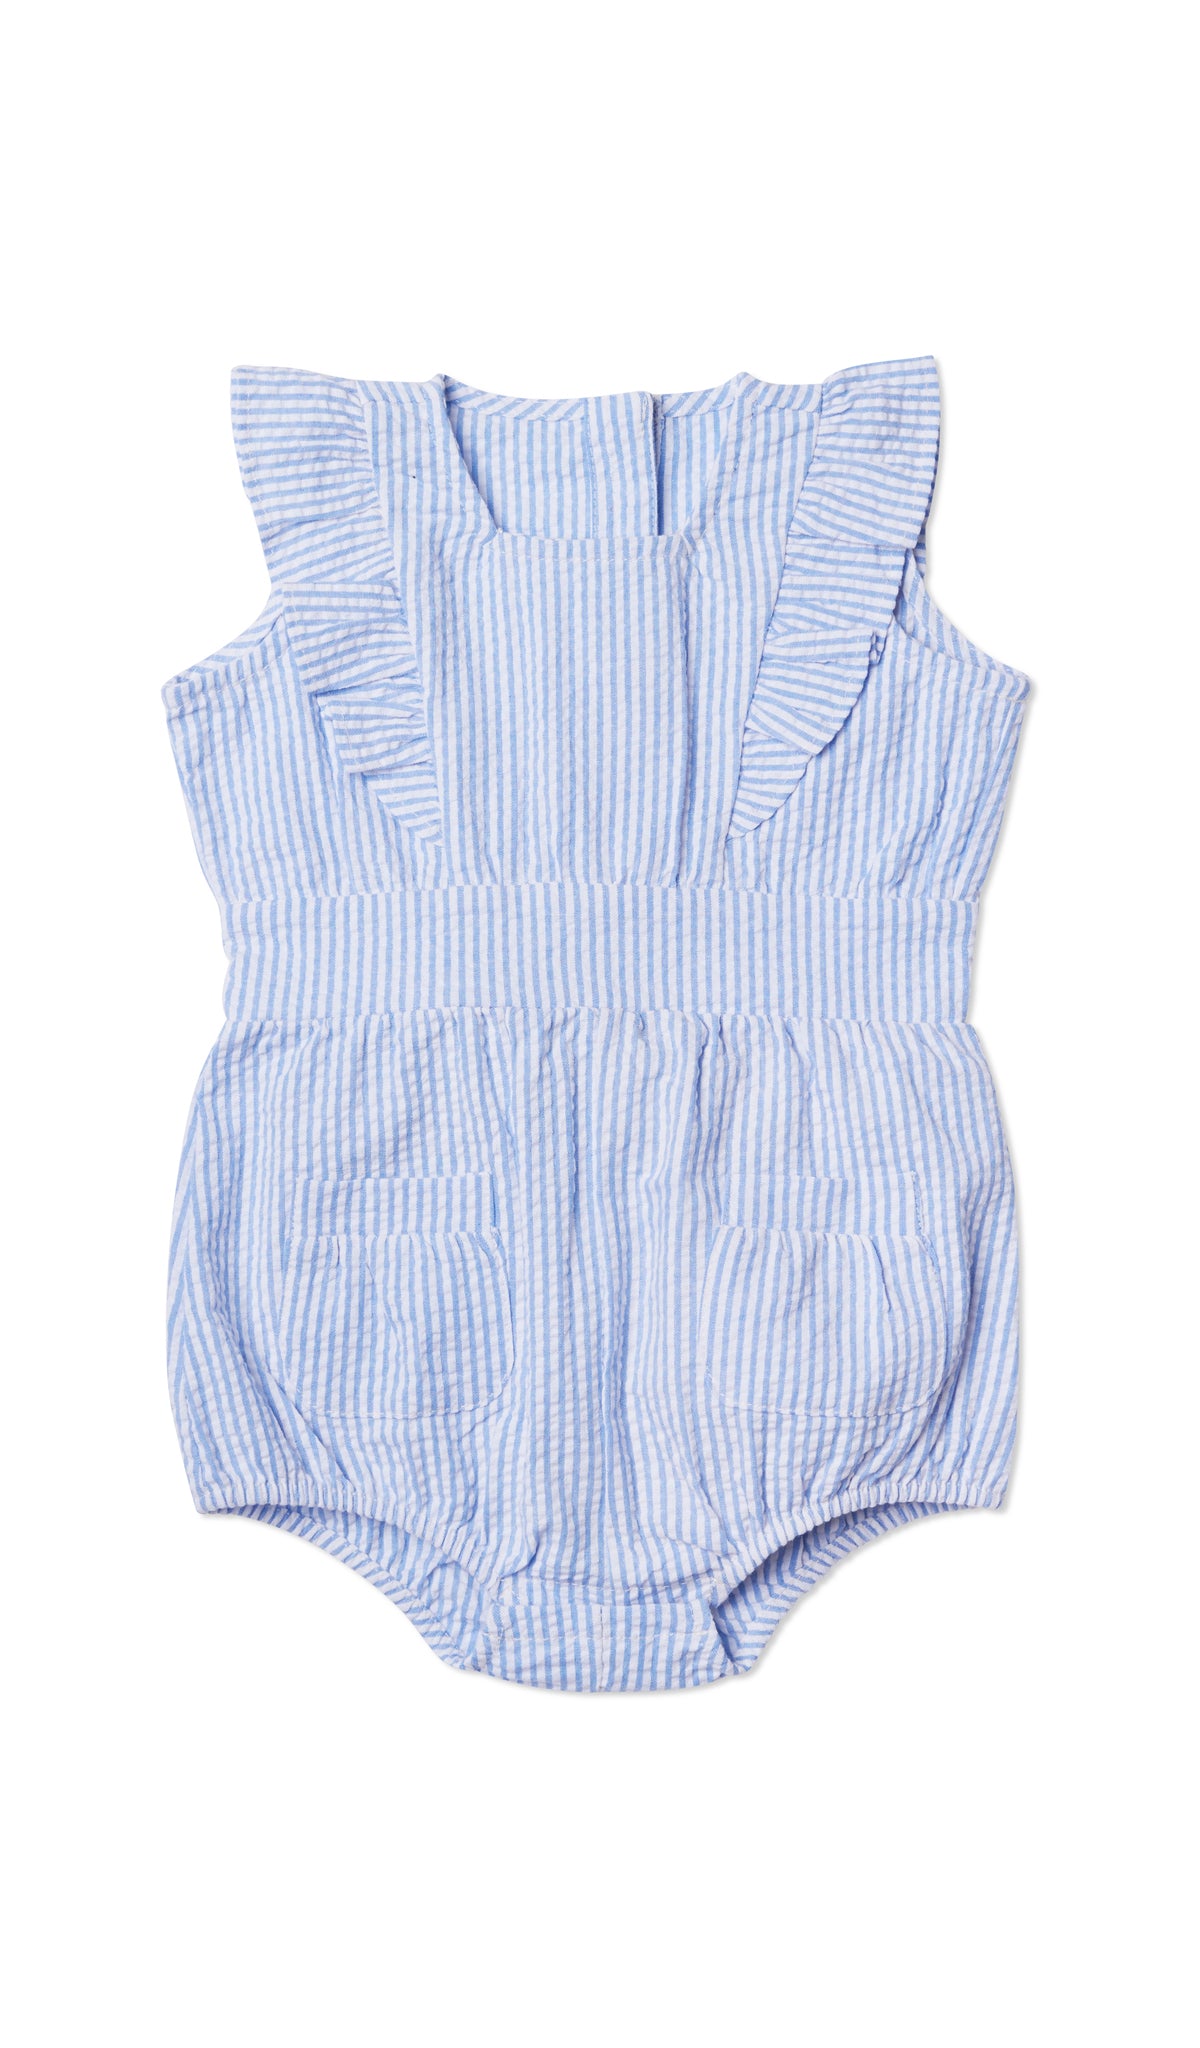 Royal Stripe Baby Ruffle Bubble with ruffle placket on sleeveless bodice and elasticated leg openings.